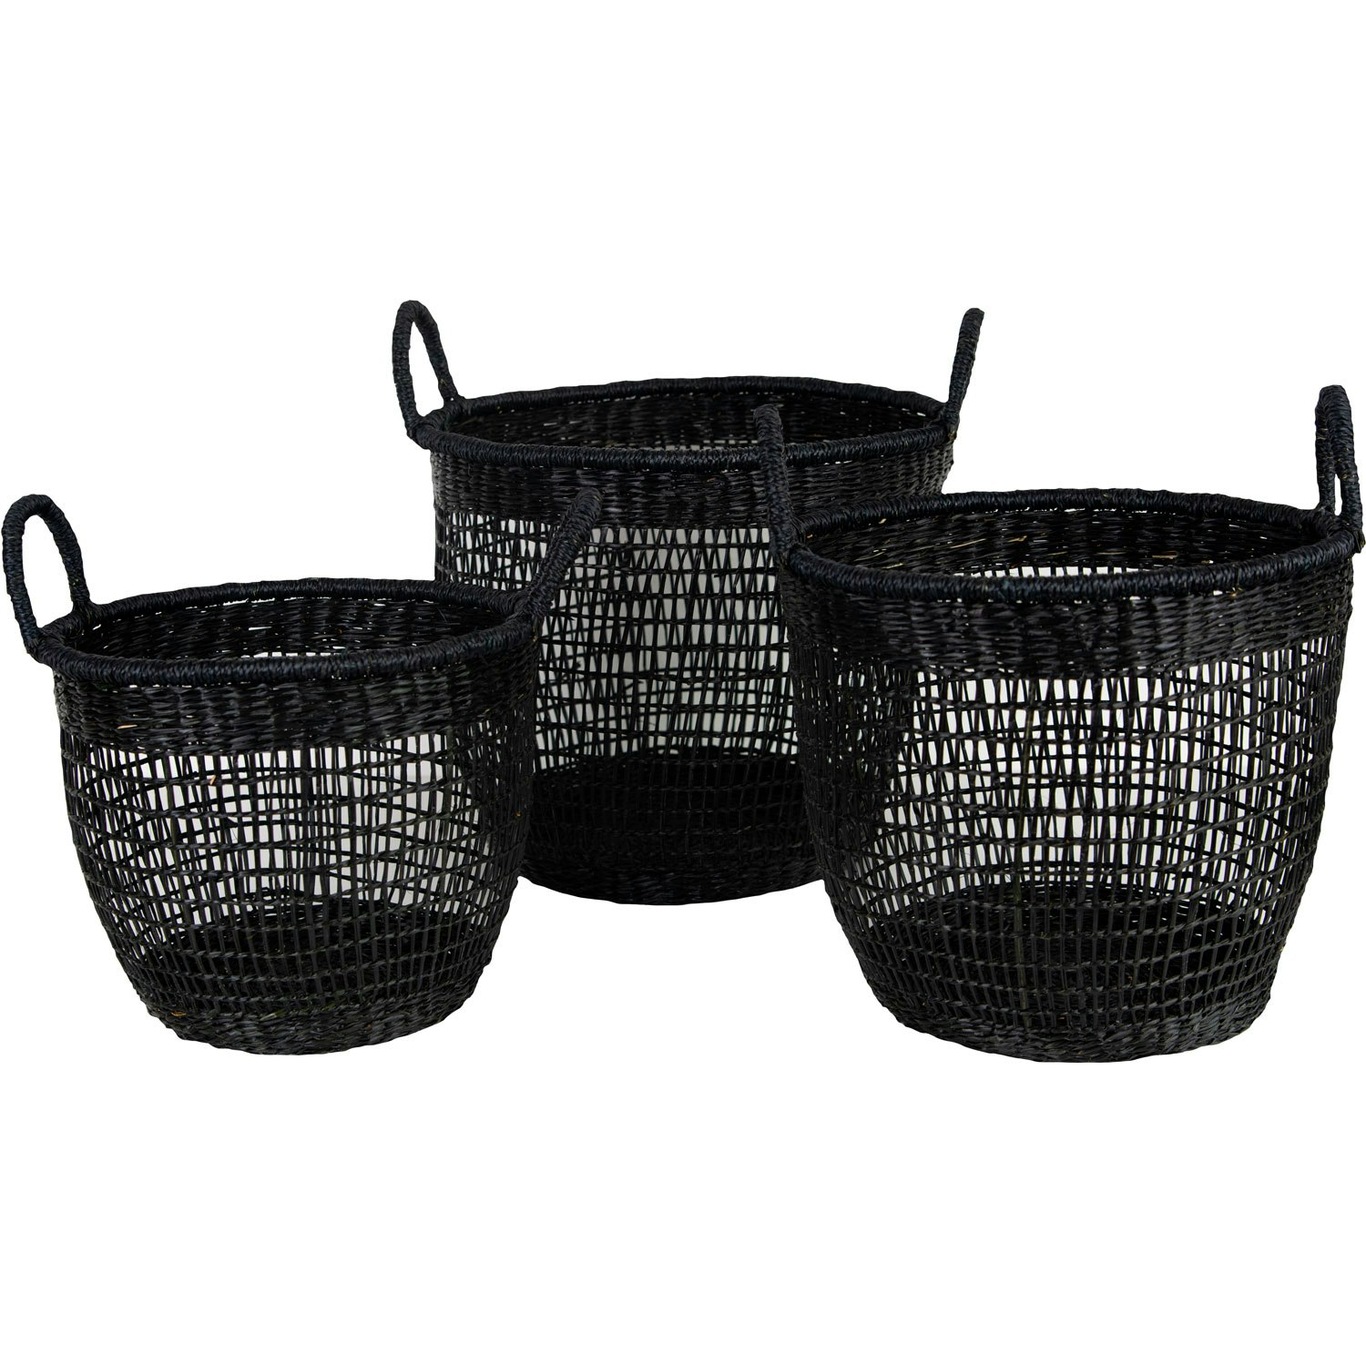 Pickus Baskets Black 3-pack